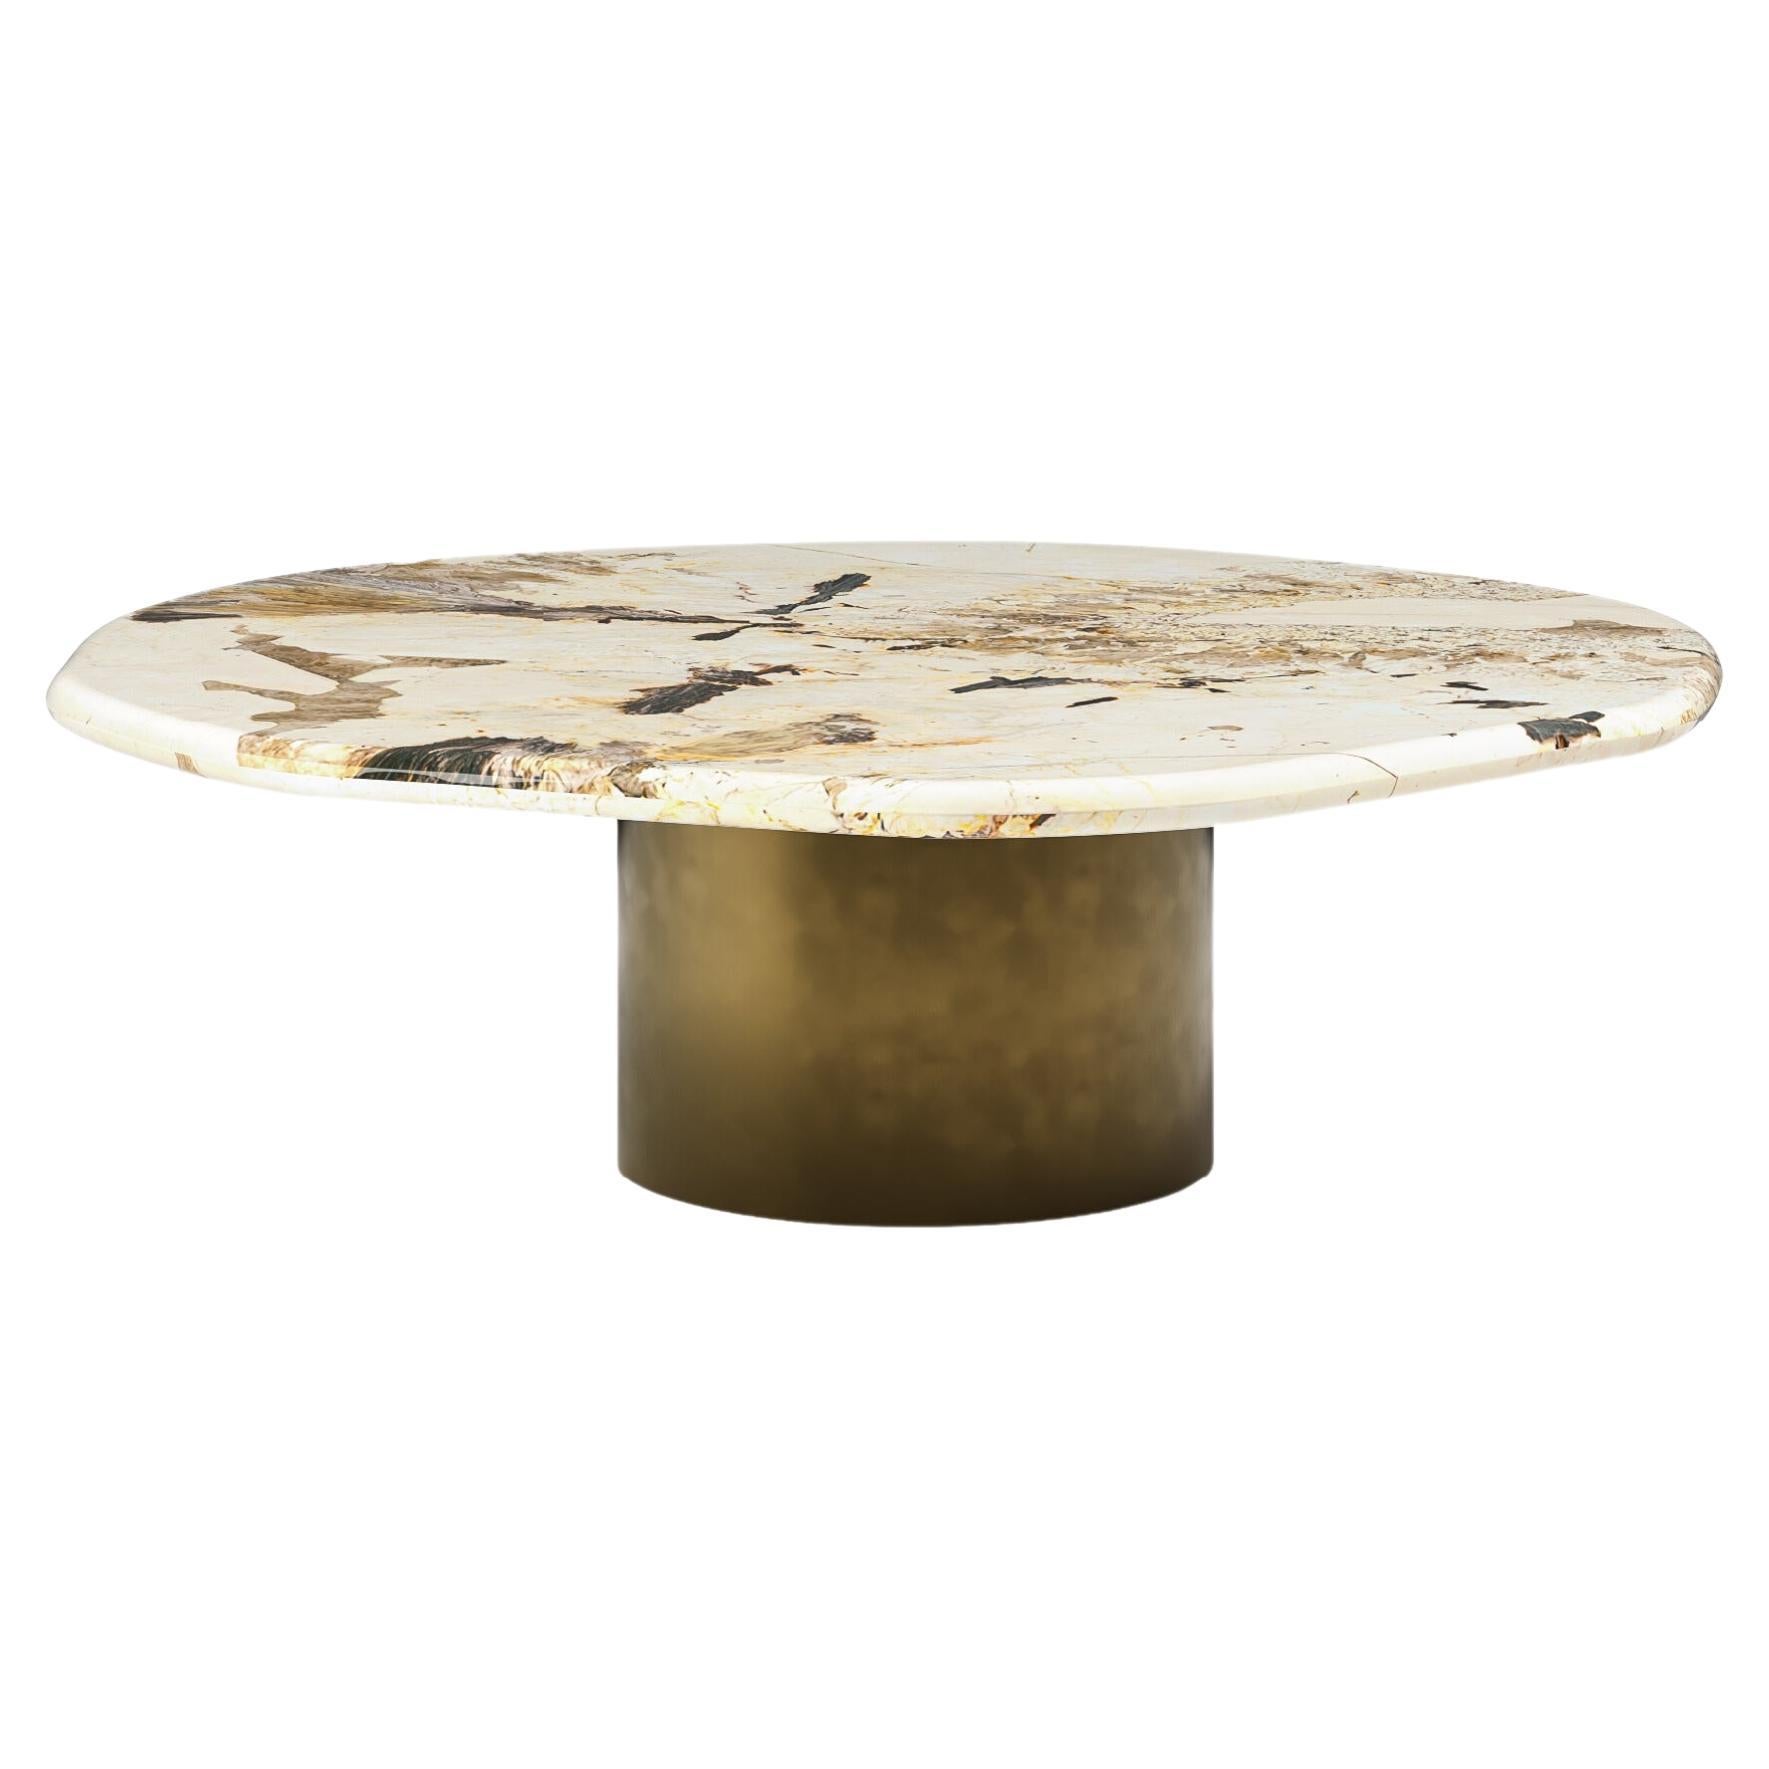 FORM(LA) Lago Round Coffee Table 60”L x 60”W x 14”H Quartzite & Antique Bronze